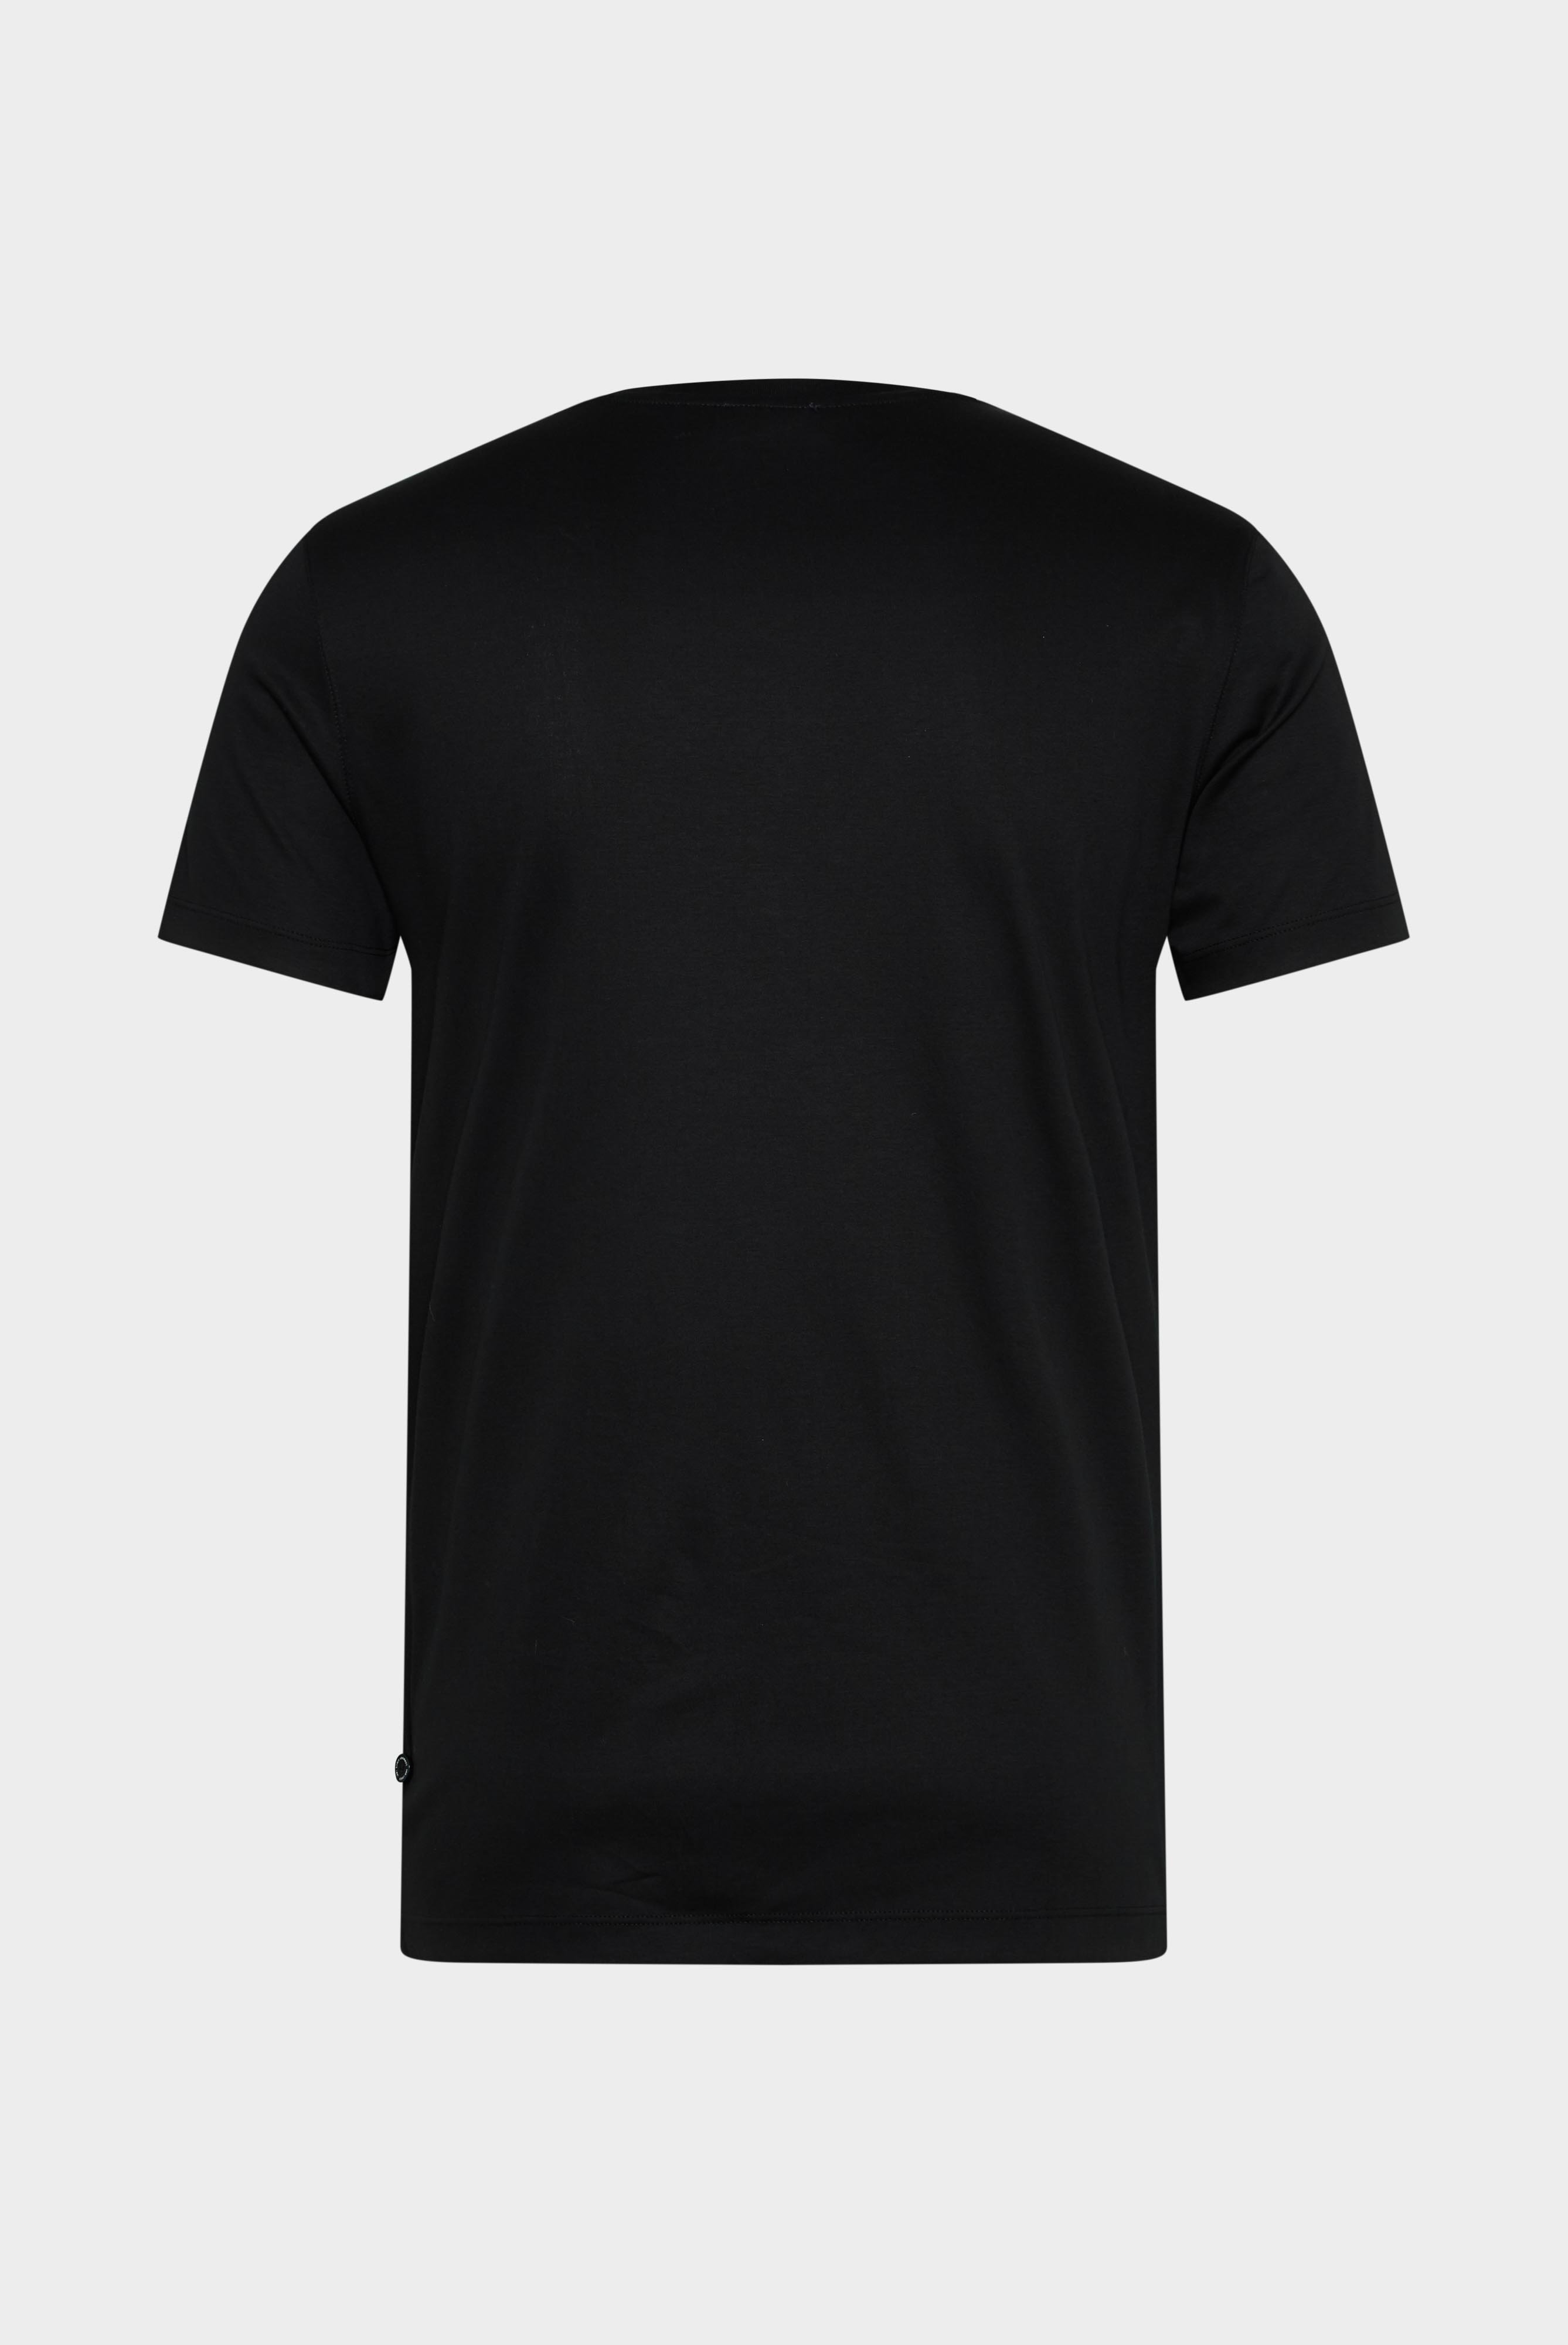 T-Shirts+Plain Luxurious Swiss Cotton Jersey V-Neck T-Shirt+20.1715.UX.180031.099.XS